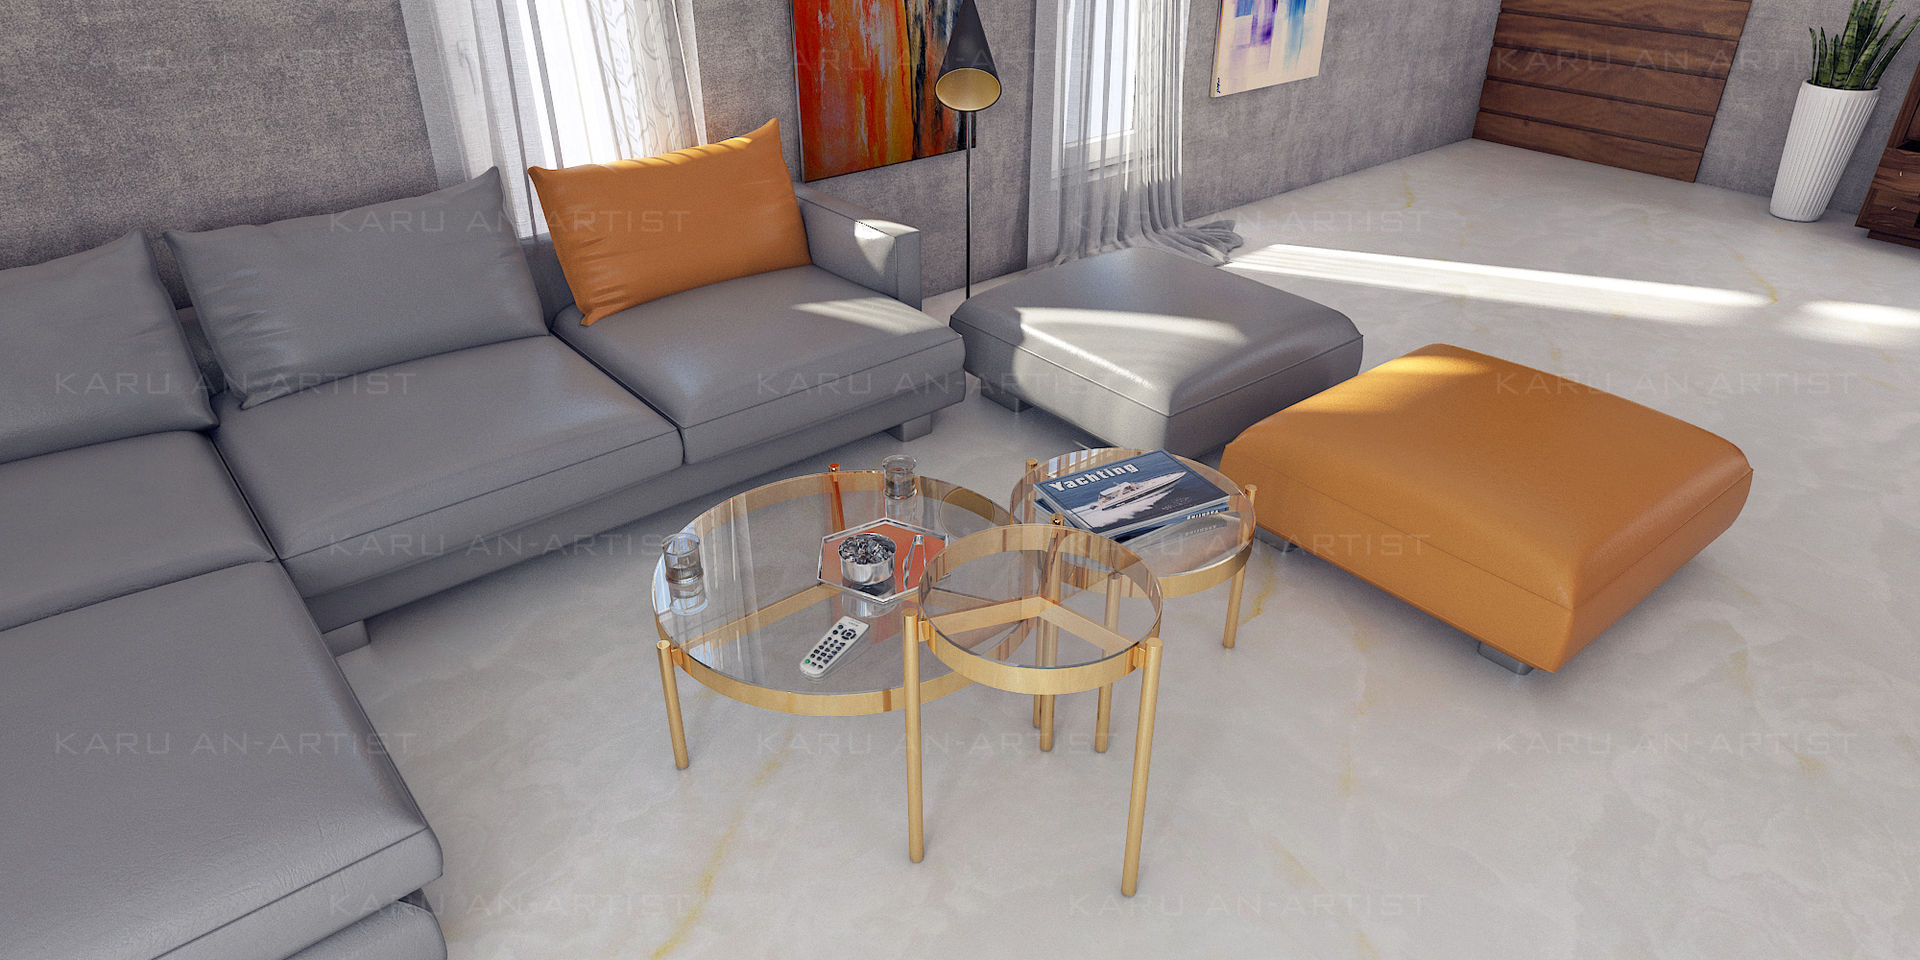 A Modern Living Room, KARU AN ARTIST KARU AN ARTIST モダンデザインの リビング